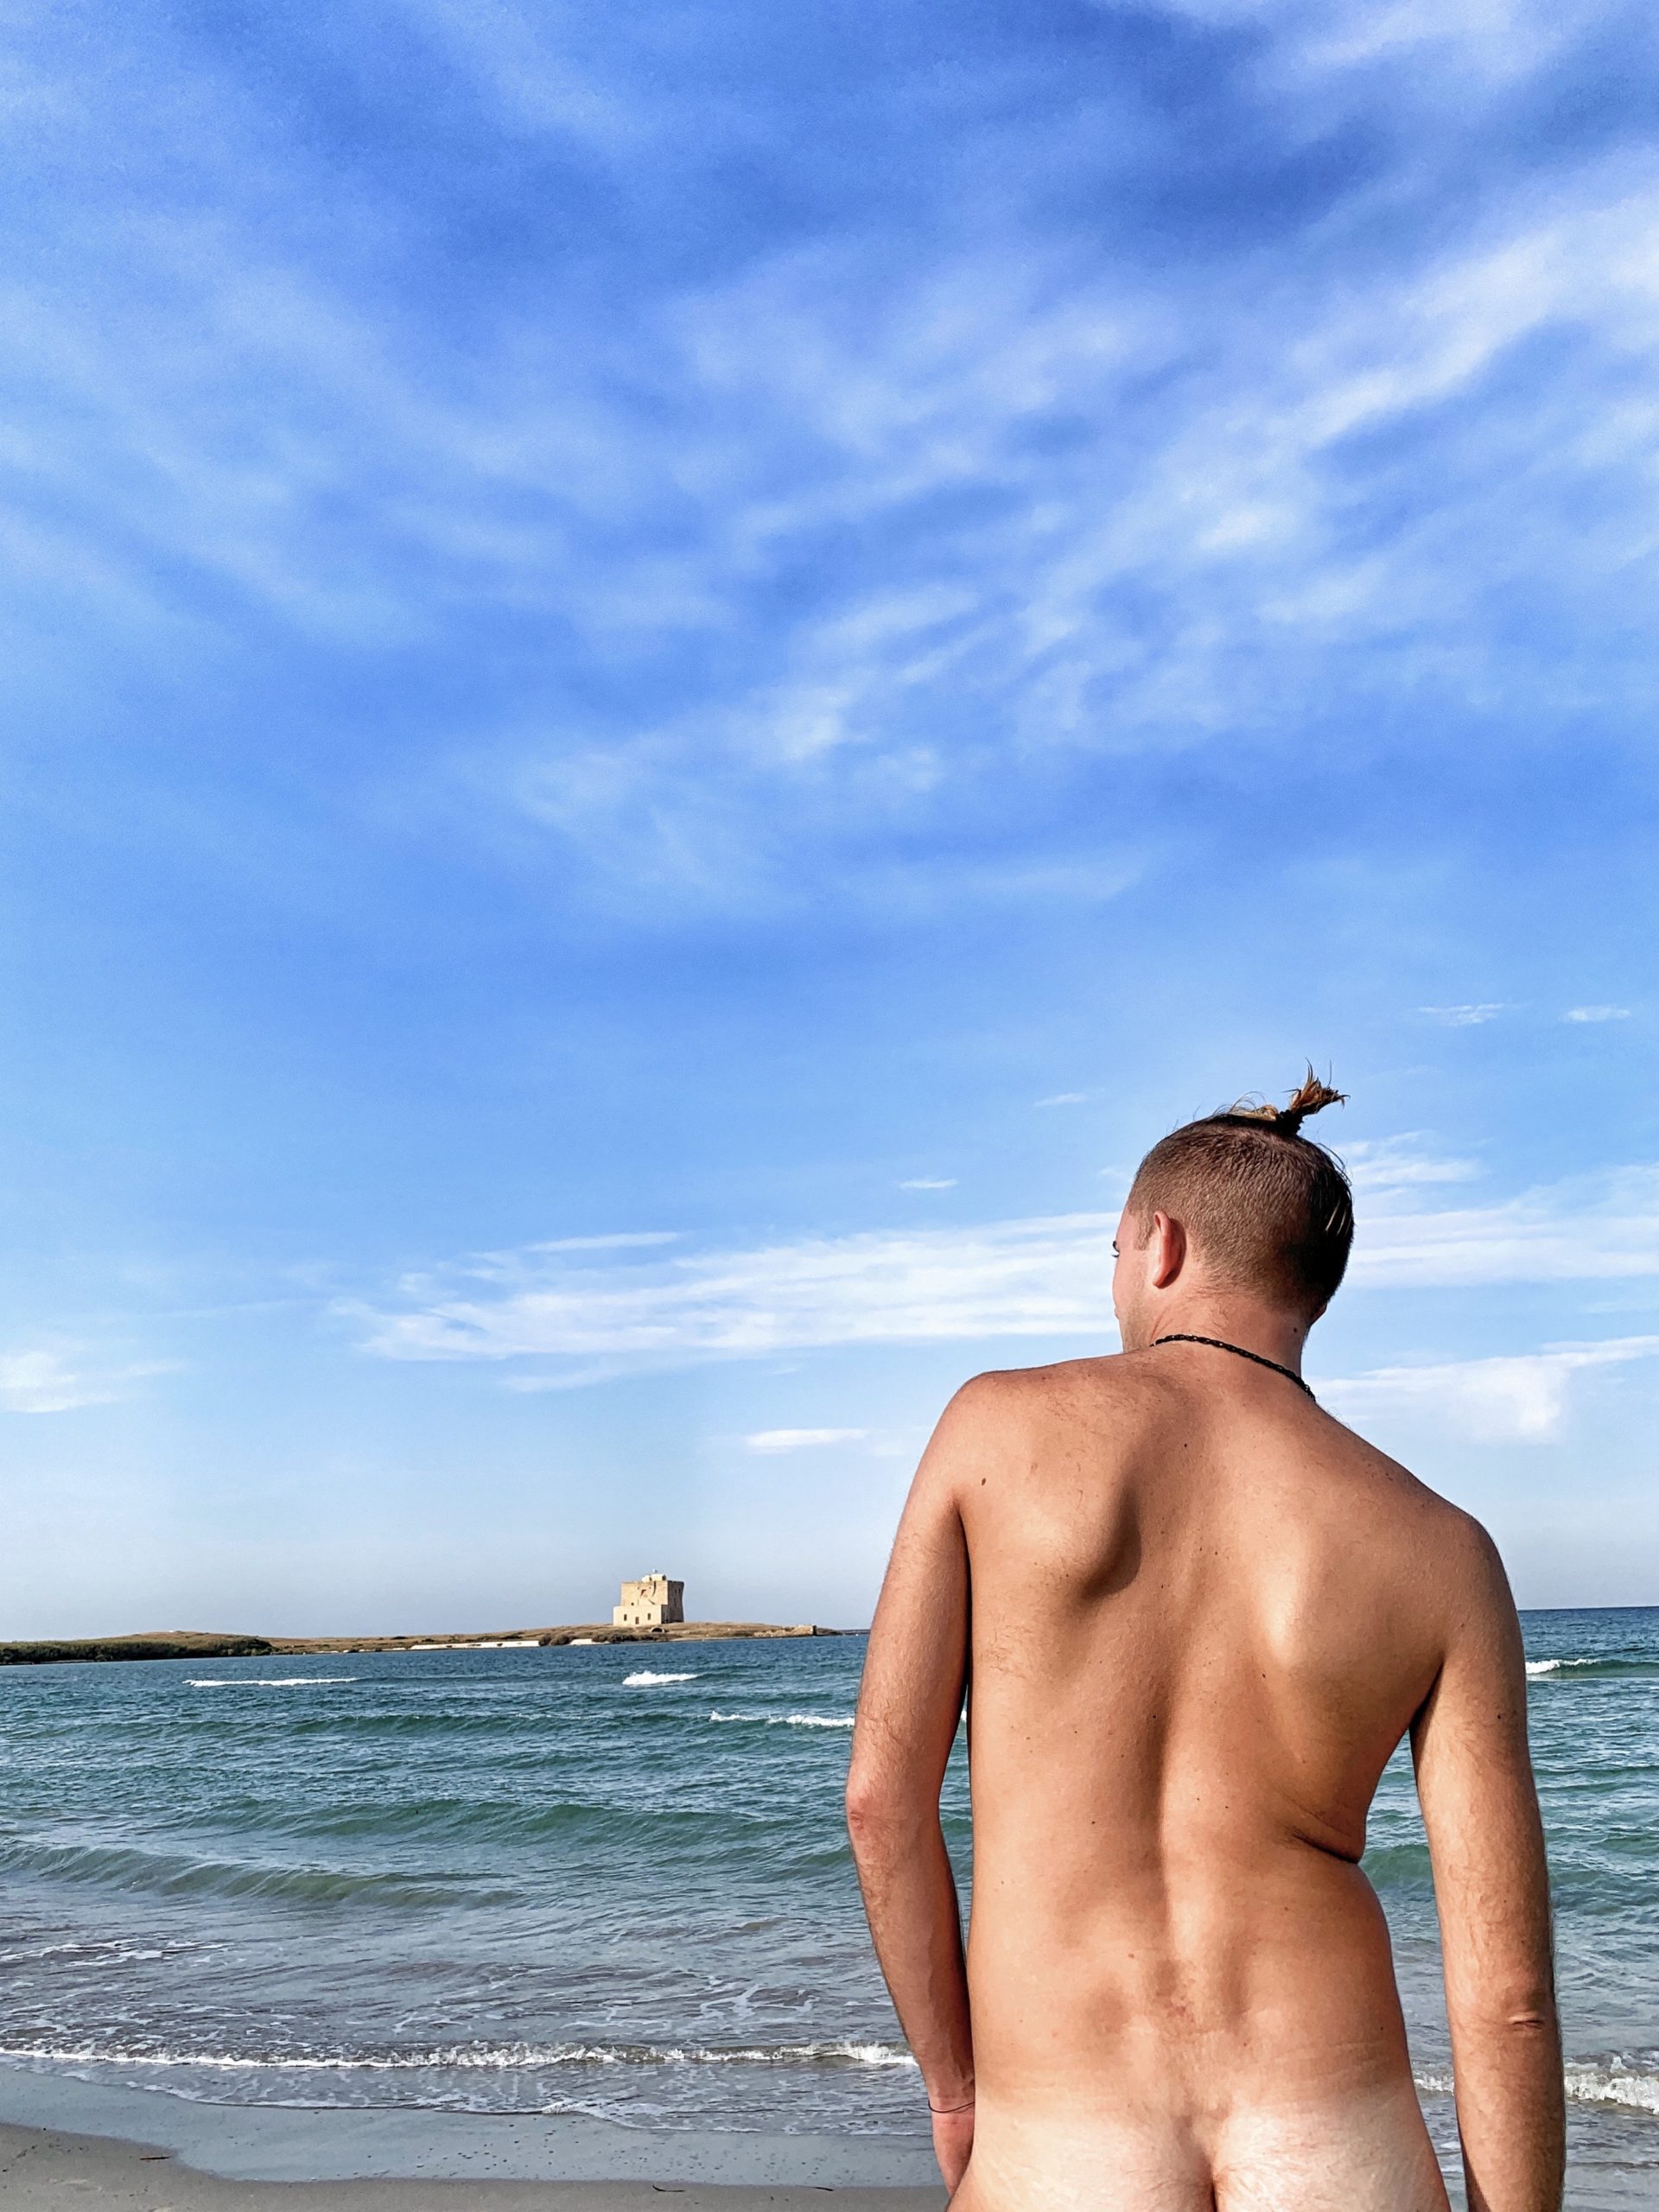 Joong Ki Dating Nude Beach Boner